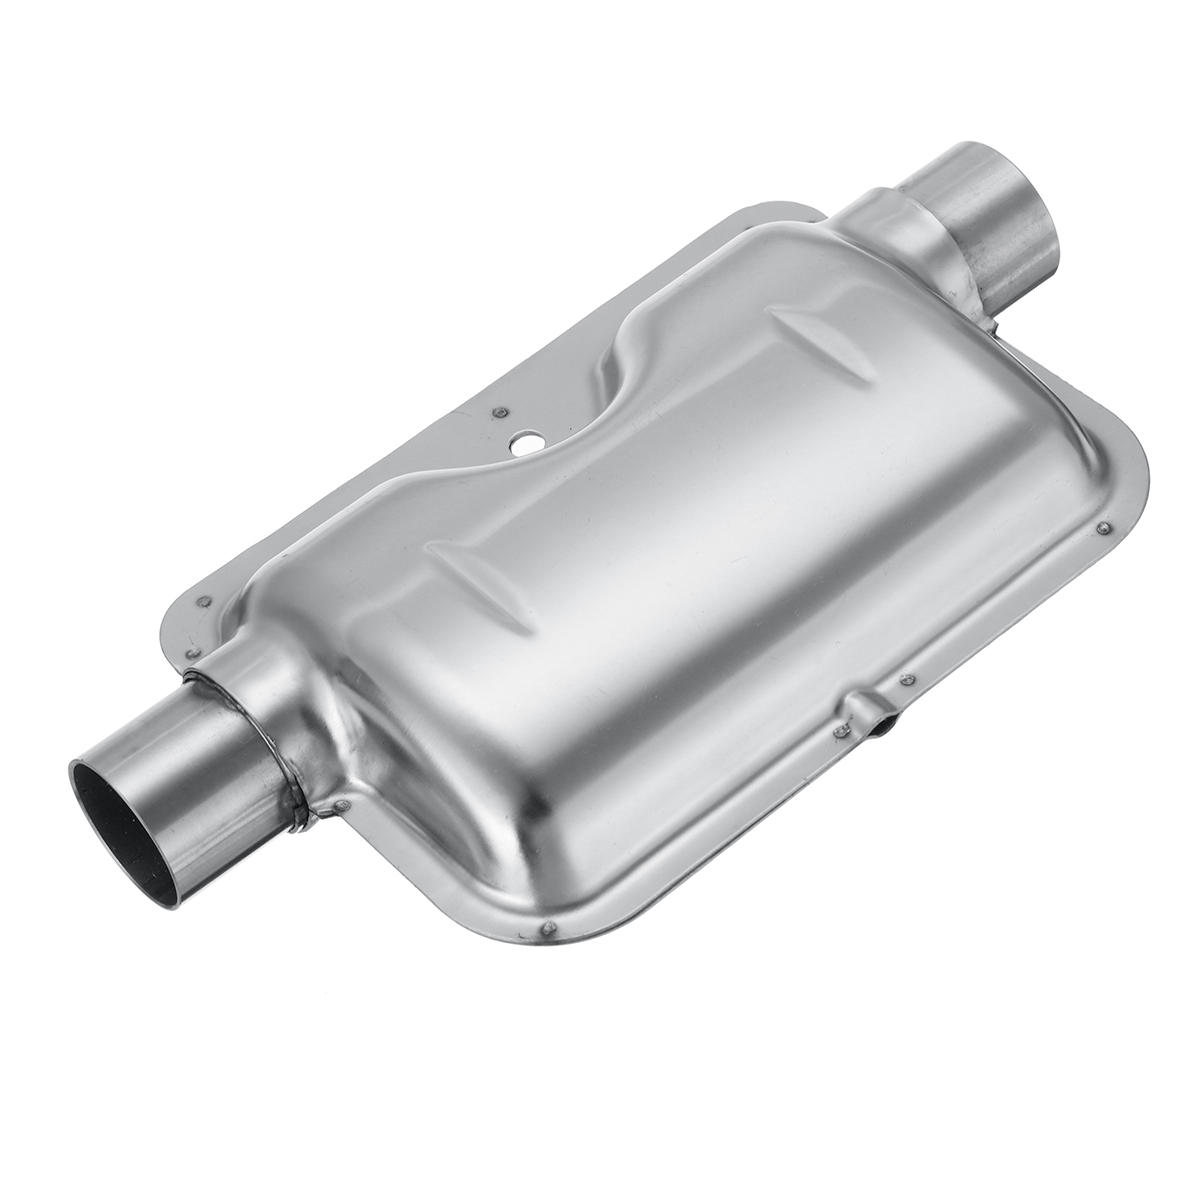 Diesel-Heater-Exhaust-Muffler-Pipe-Silencer-Clamps-Bracket-1366648-5